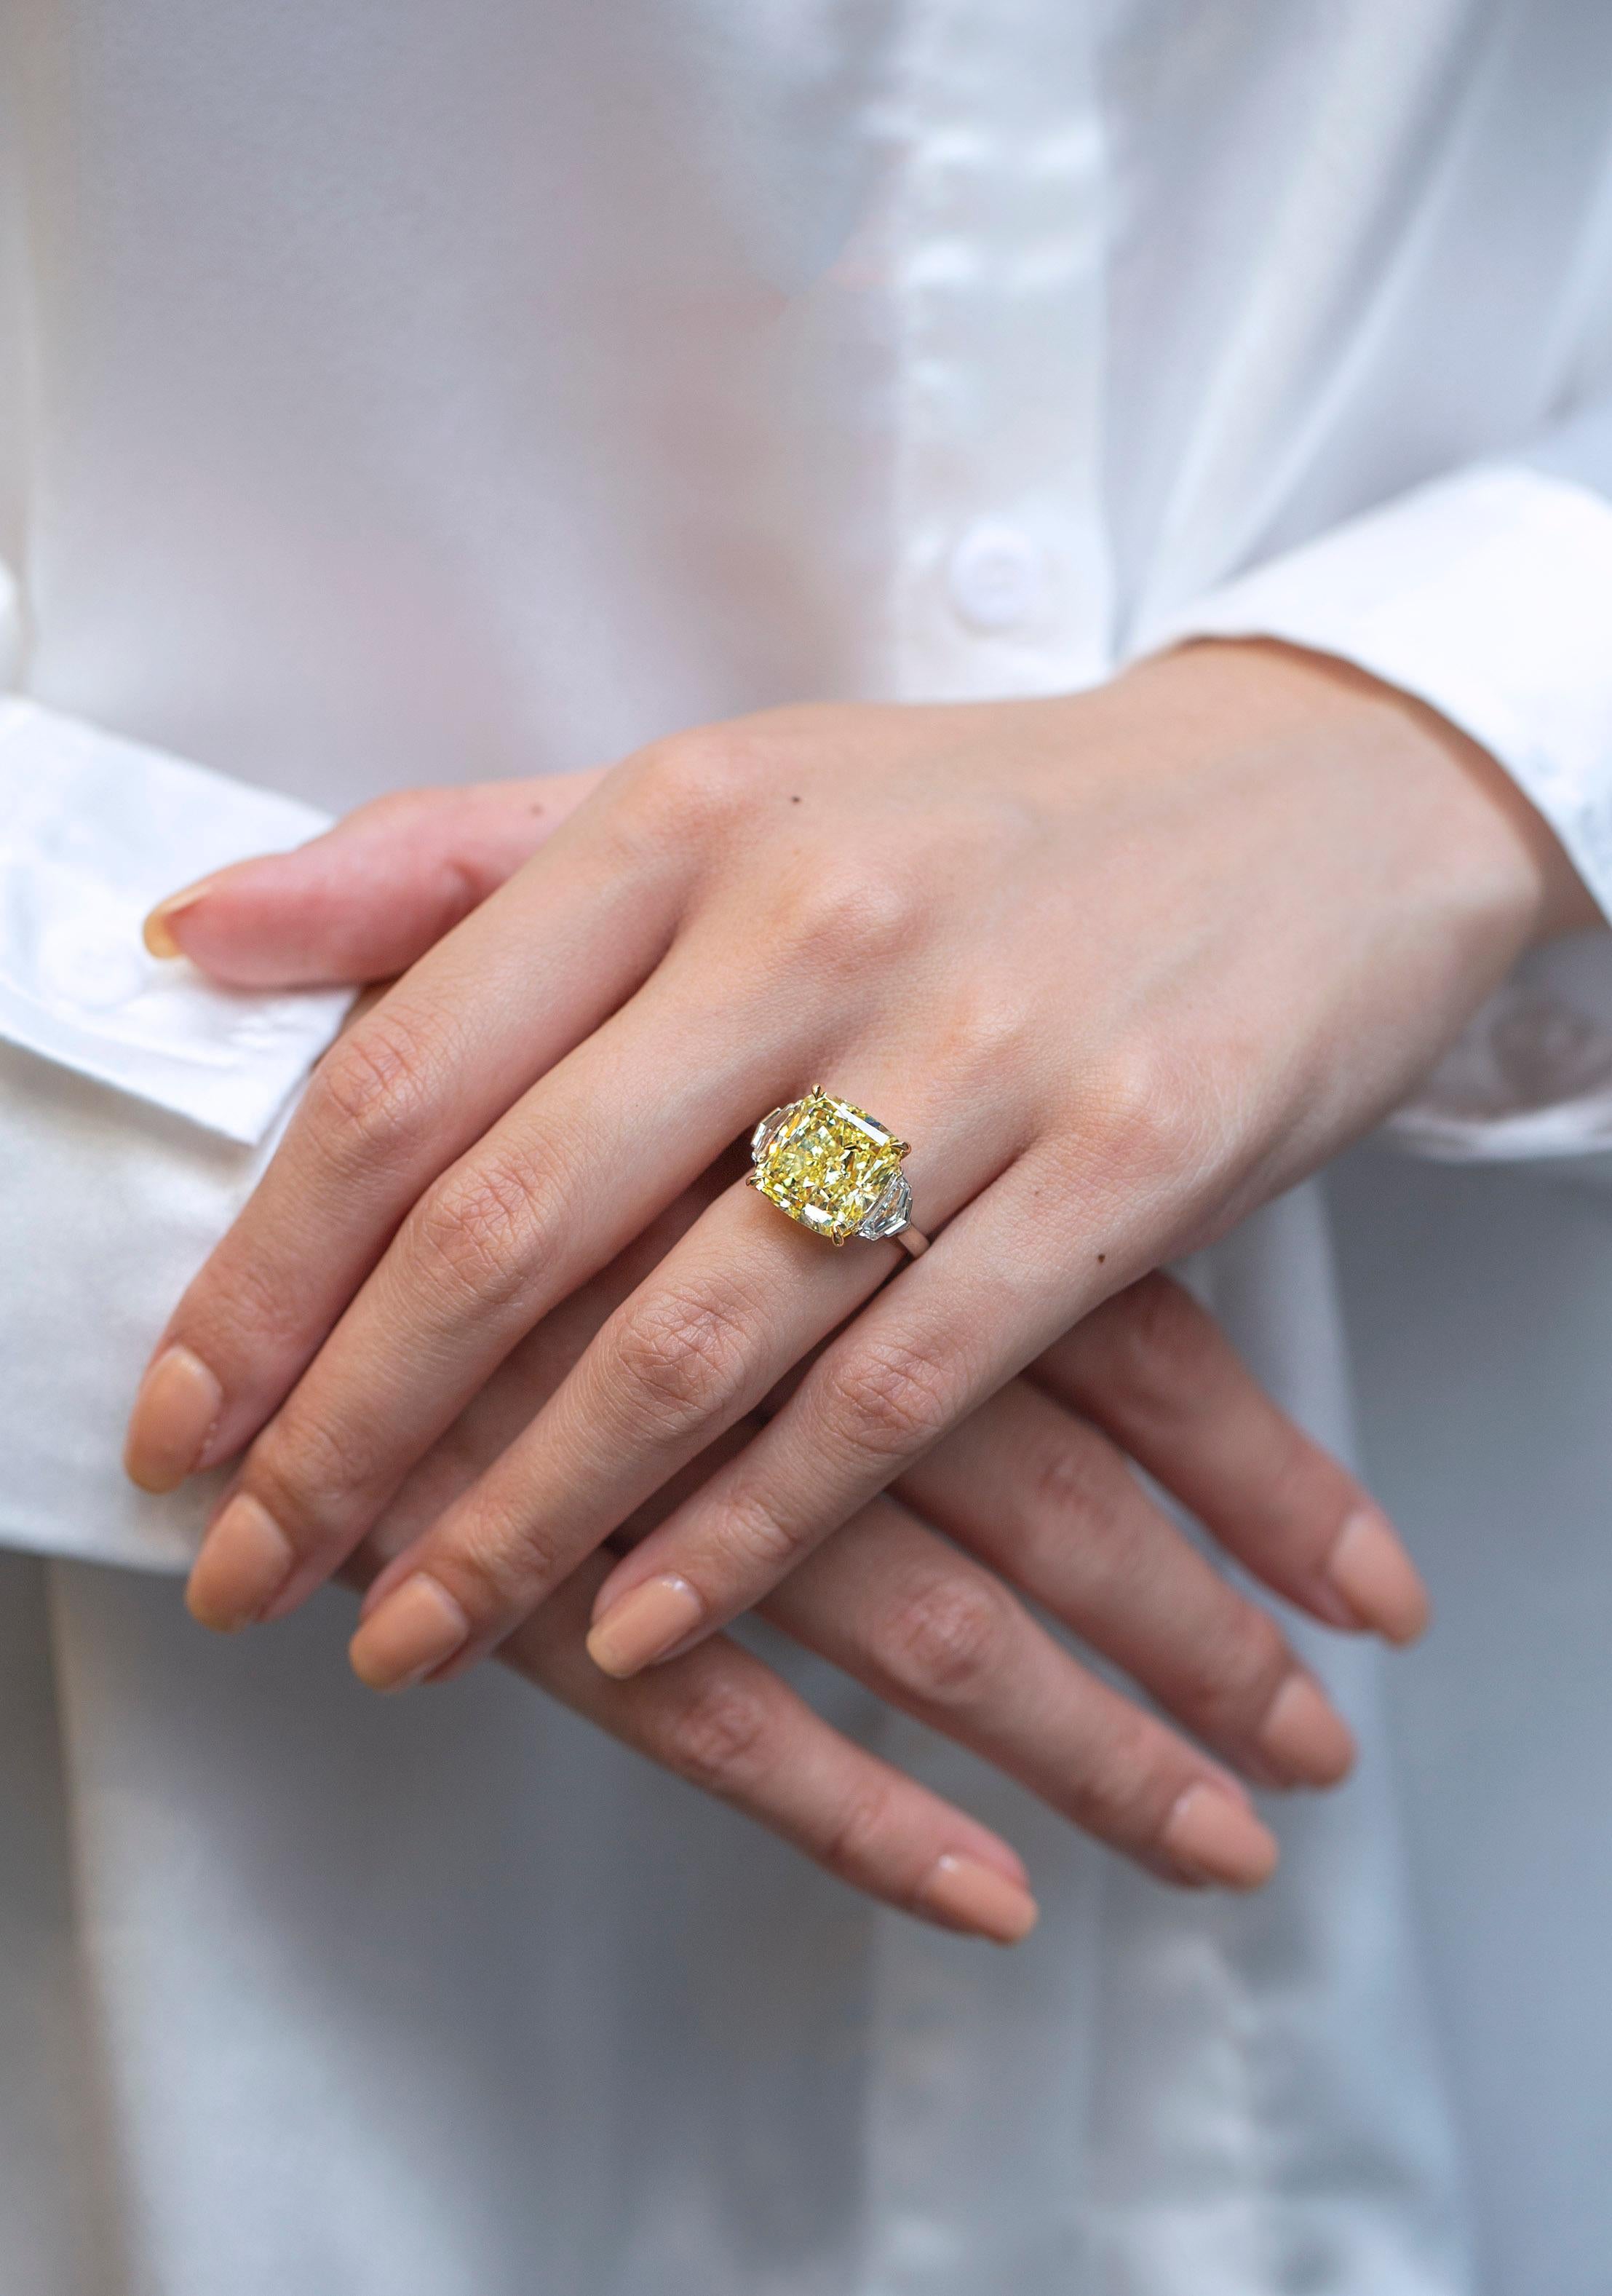 Contemporary Roman Malakov, 10.02 Carat Fancy Yellow Cushion Cut Diamond Engagement Ring For Sale